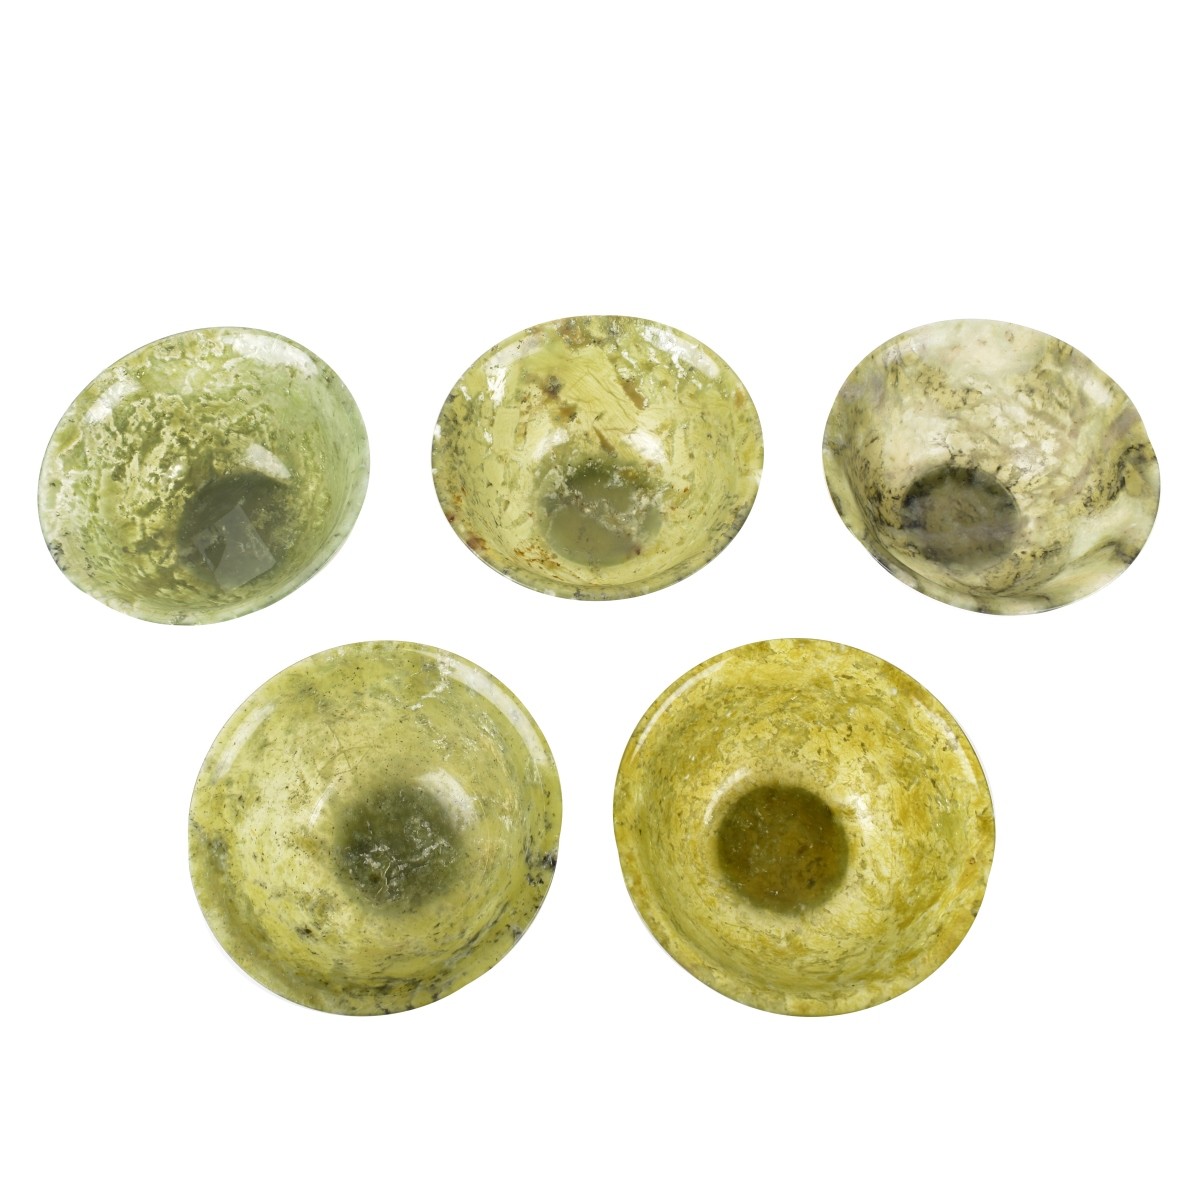 Five Chinese Jade Bowls